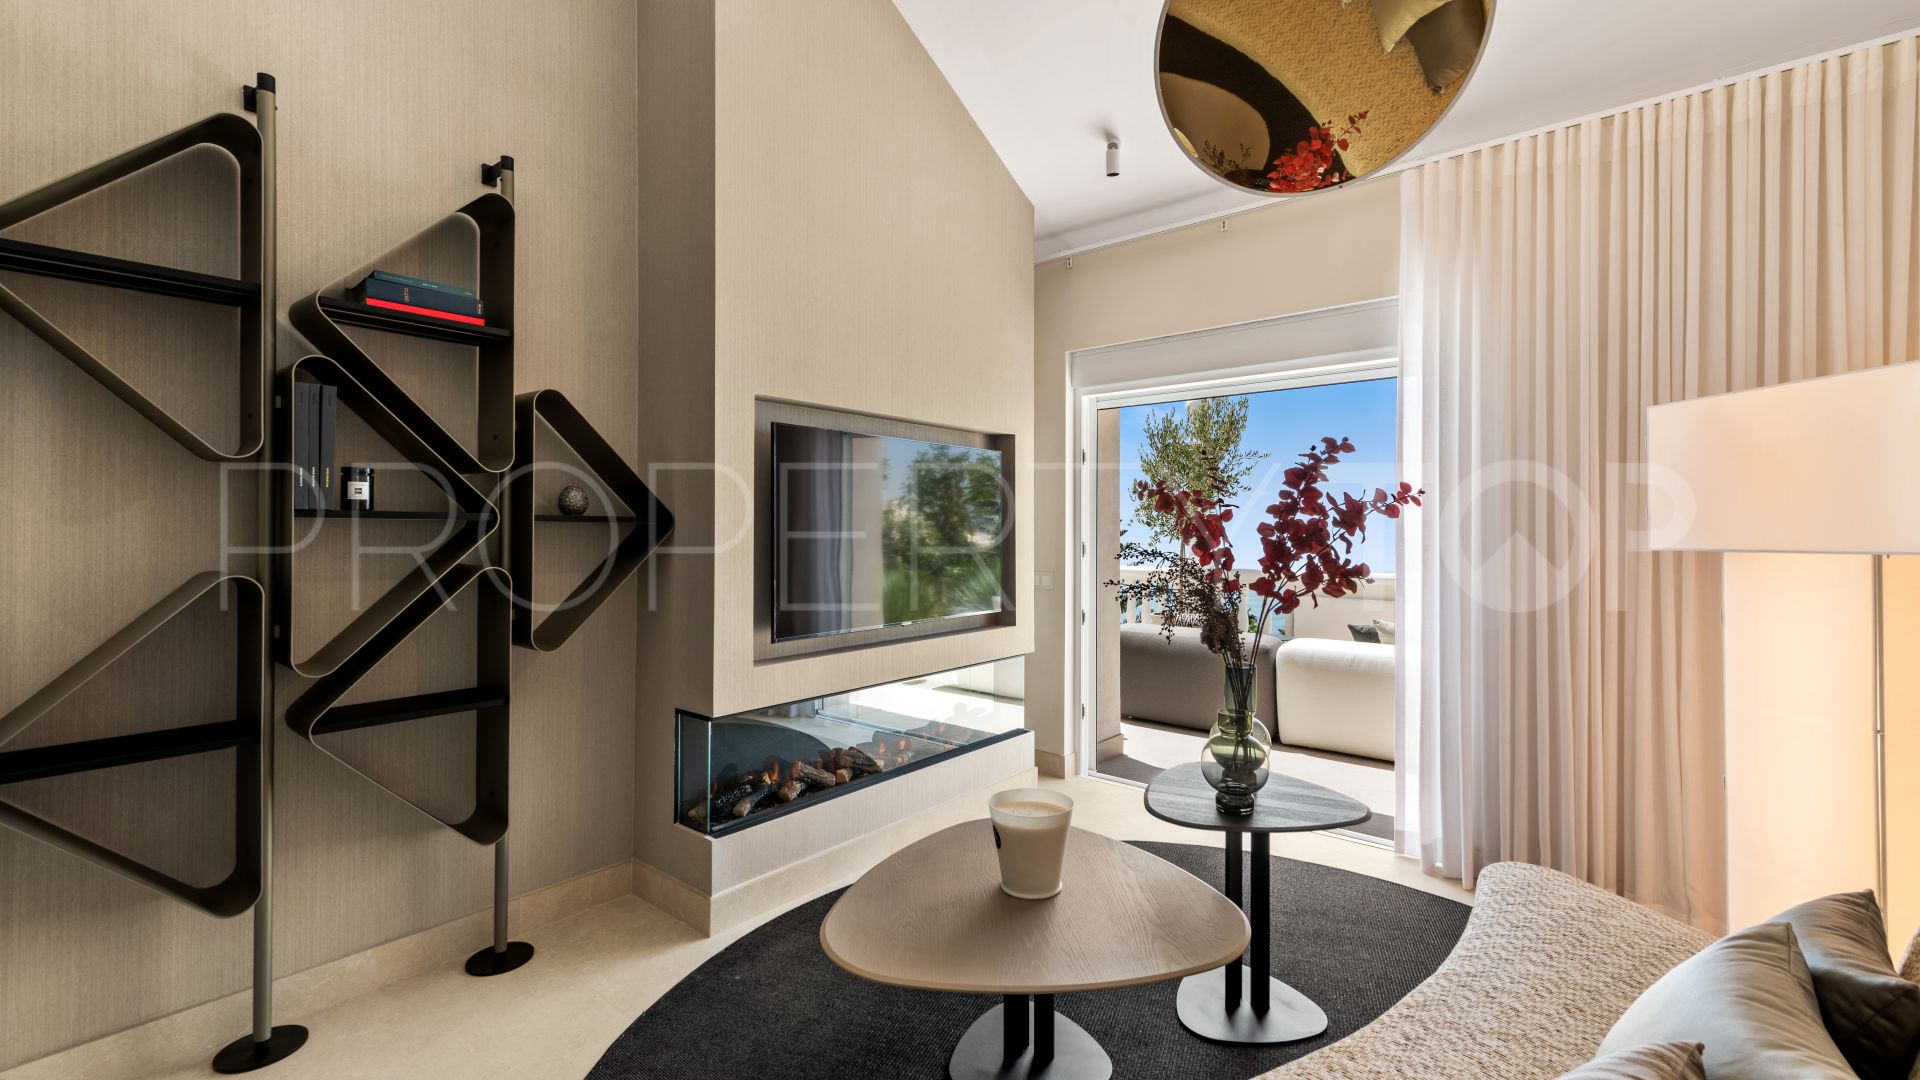 5 bedrooms duplex penthouse in Estepona for sale